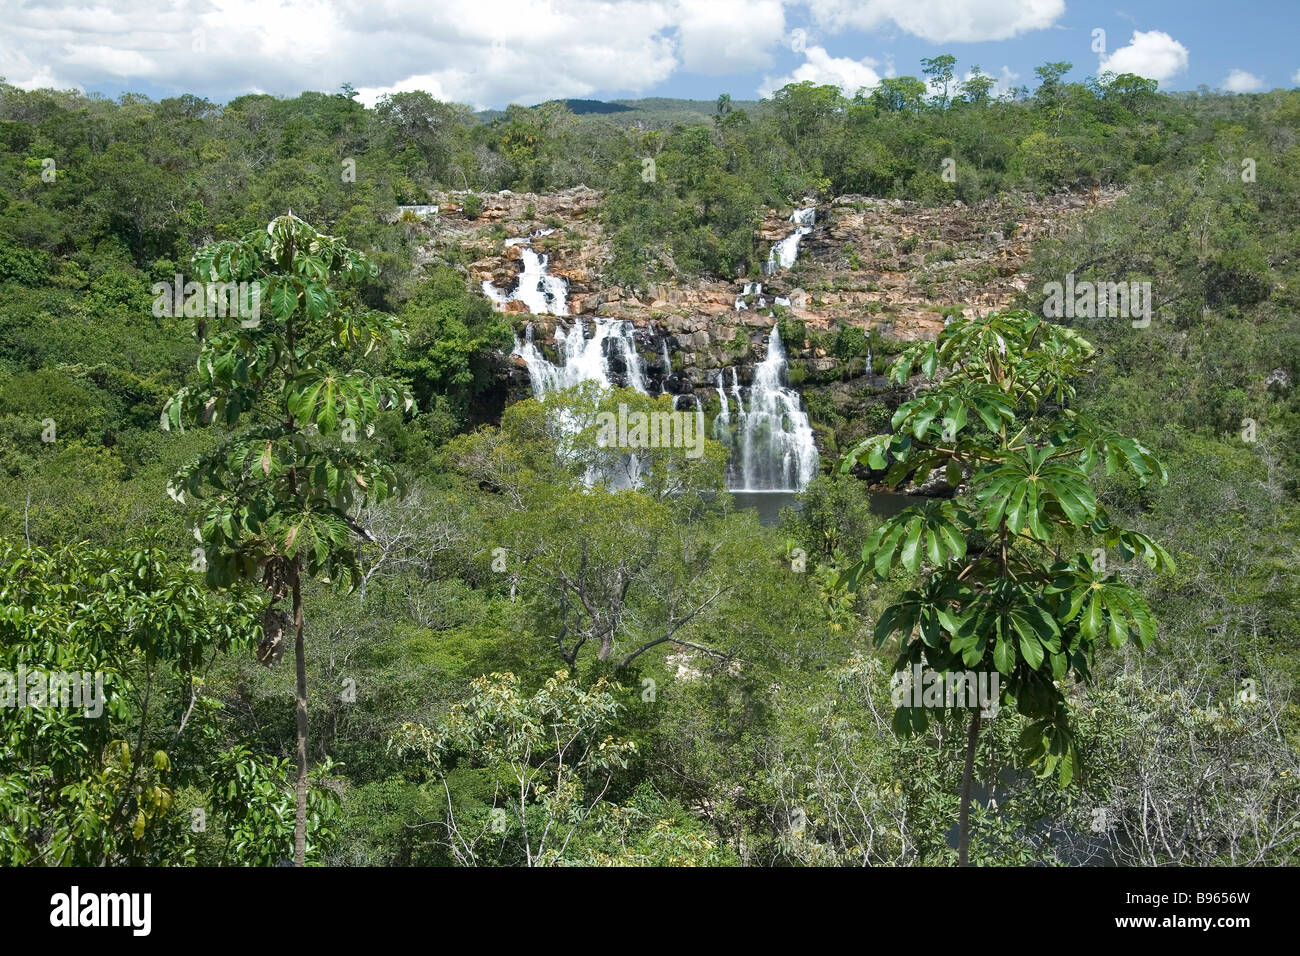 Cachoeira Poço Encantado, verzauberten Teich Wasserfall, Chapada Dos Veadeiros Veadeiros Tableland, Goias, Brasilien Stockfoto